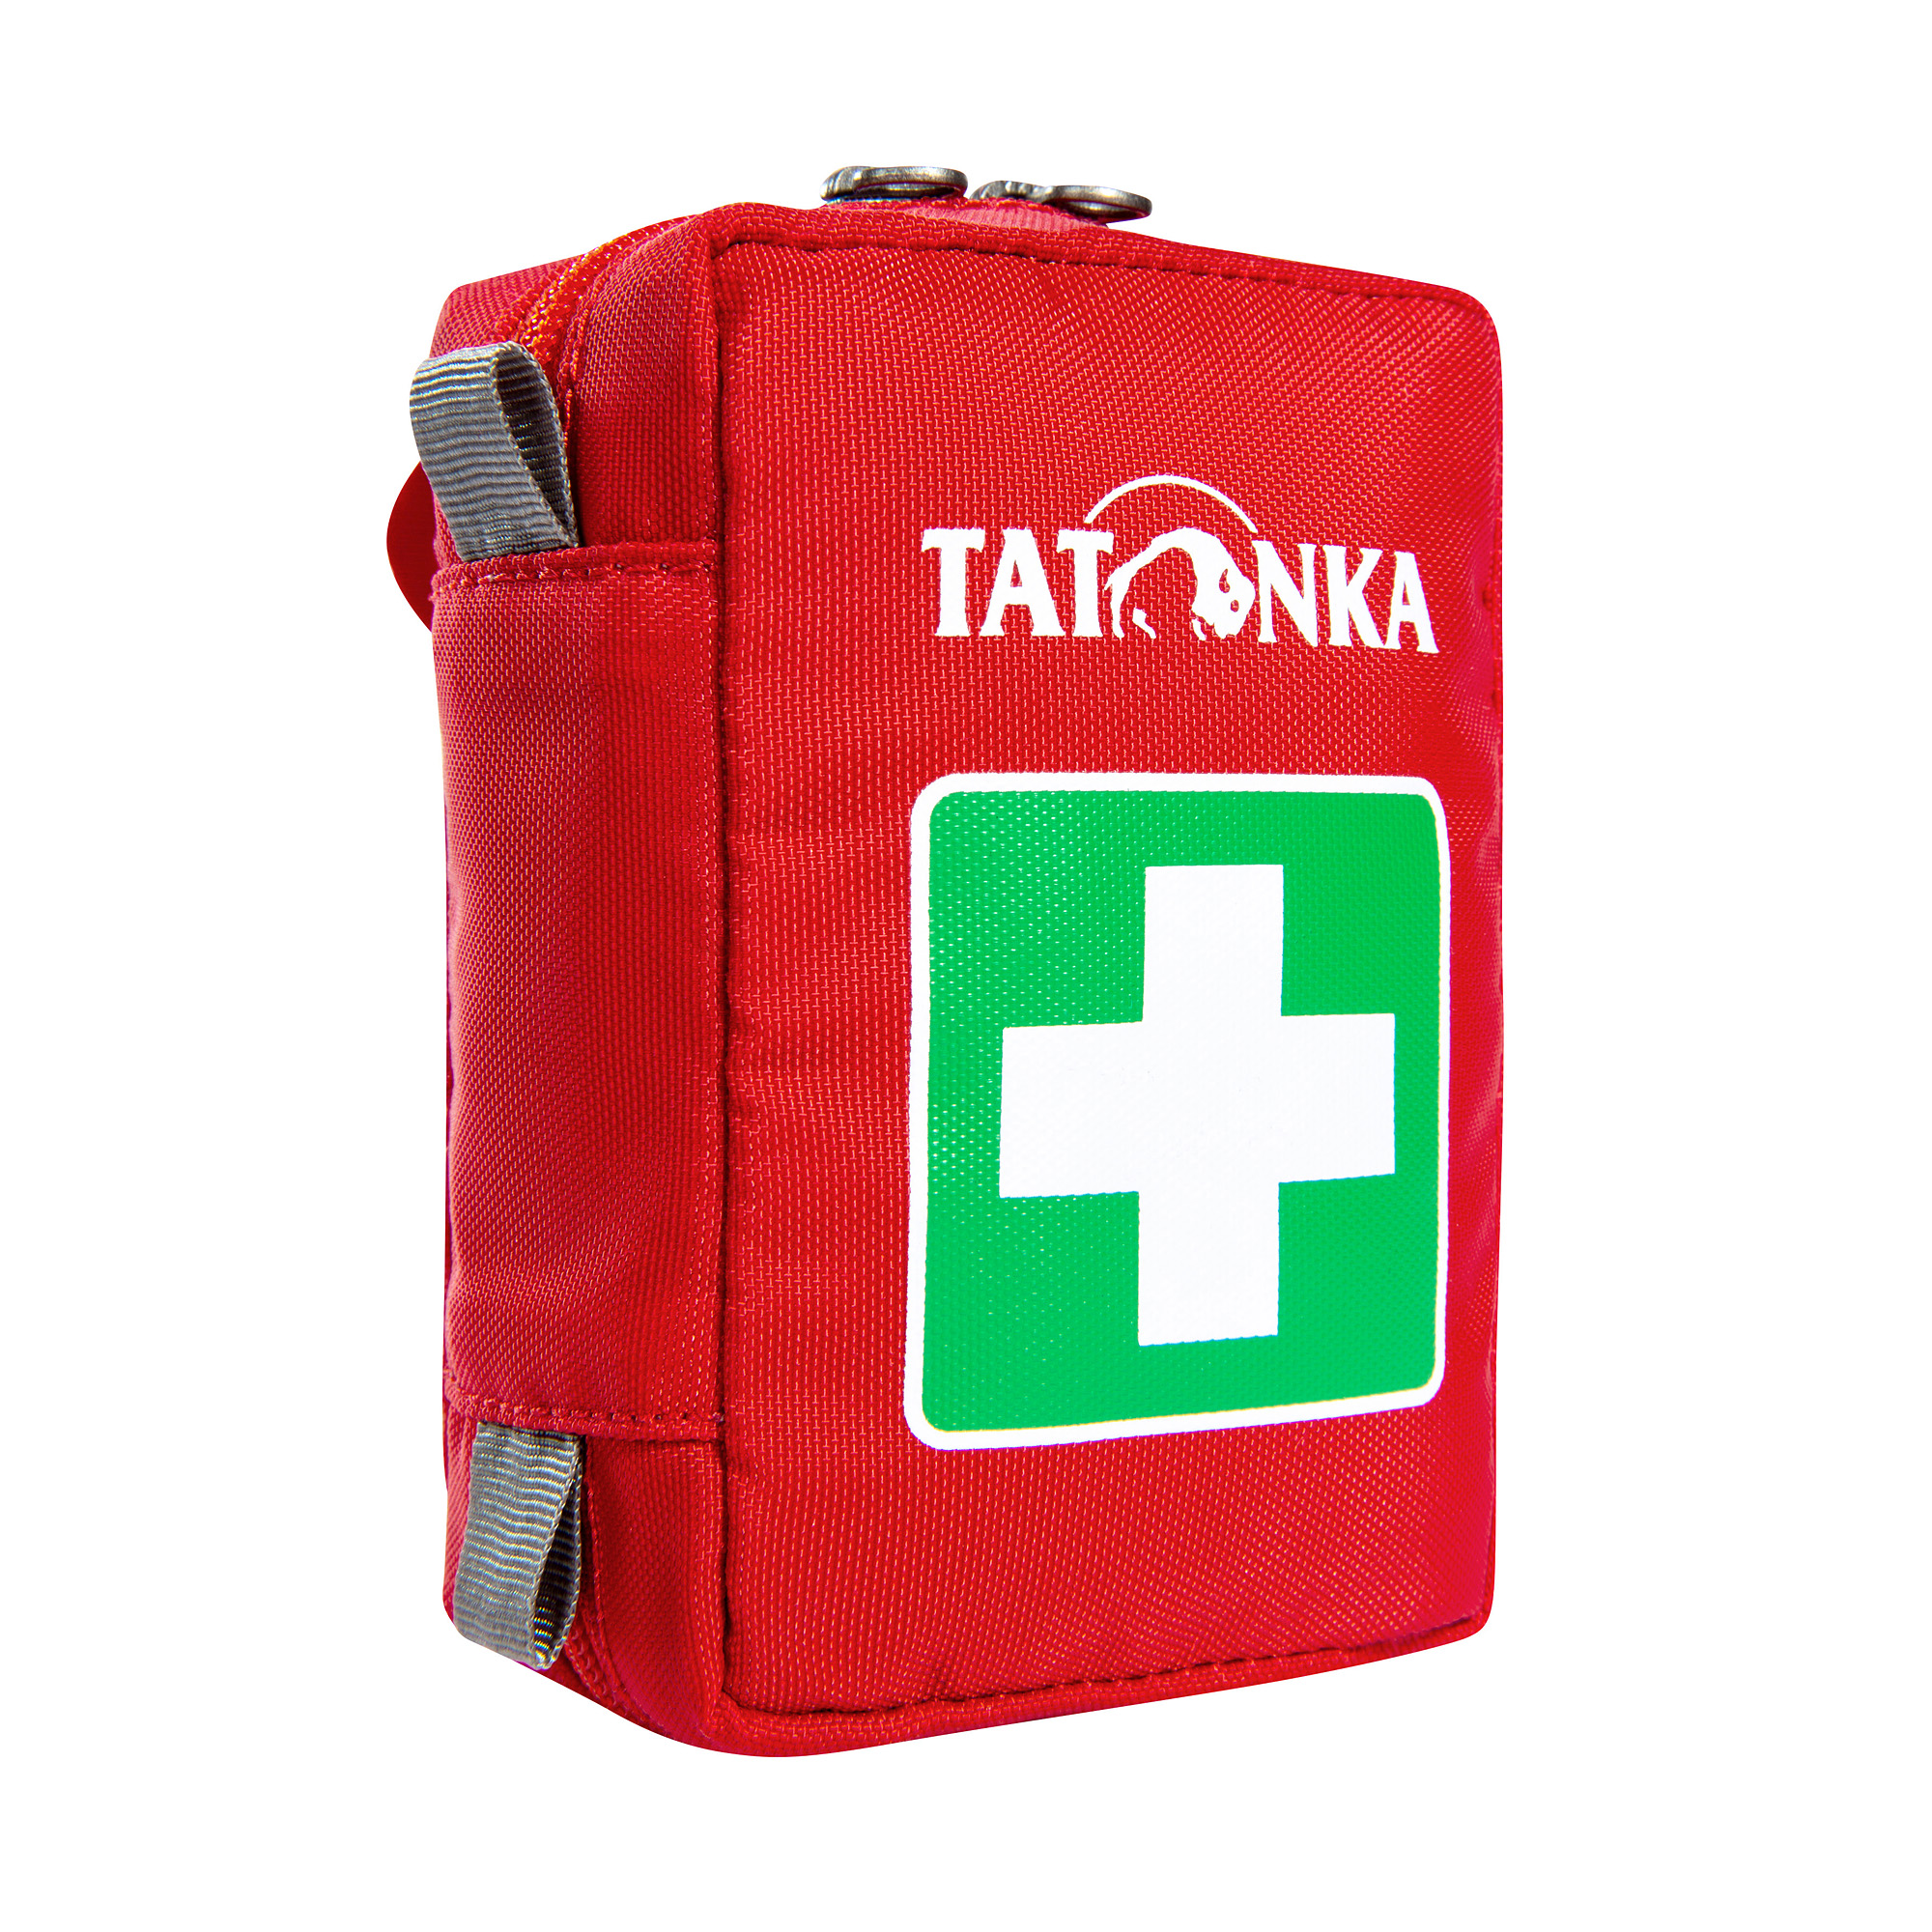 Erste Hilfe, Tatonka First Aid "XS" red rot Erste-Hilfe-Rucksäcke /-taschen 4013236976427